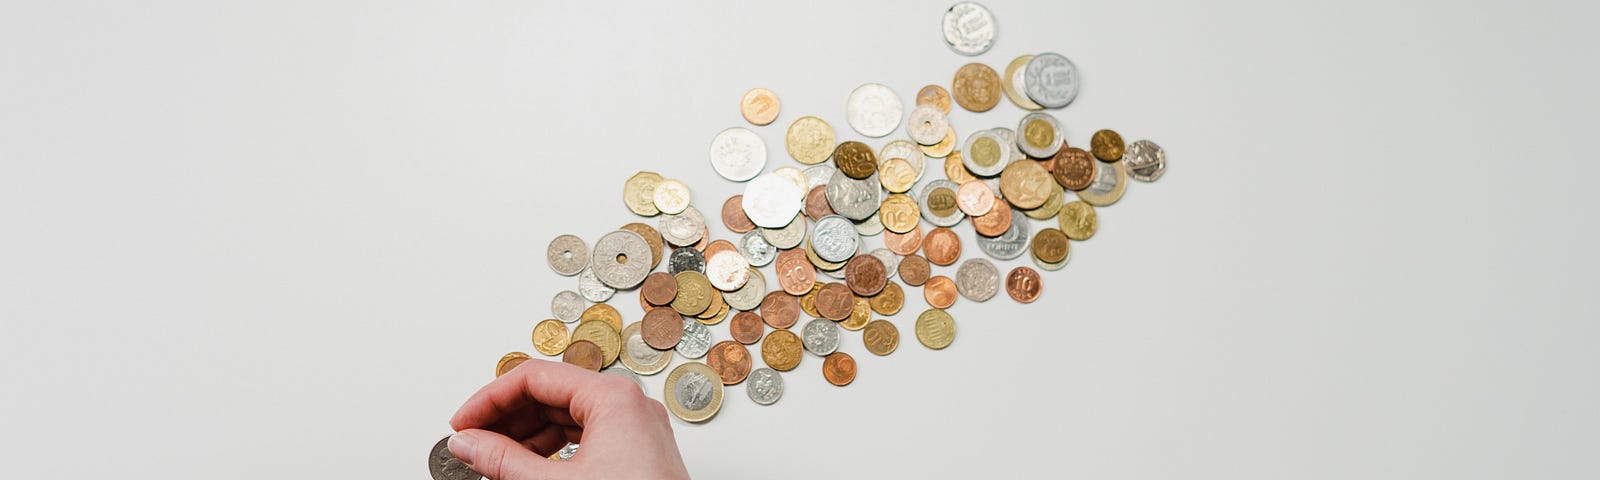 A person’s hand puts coins inside a piggy bank